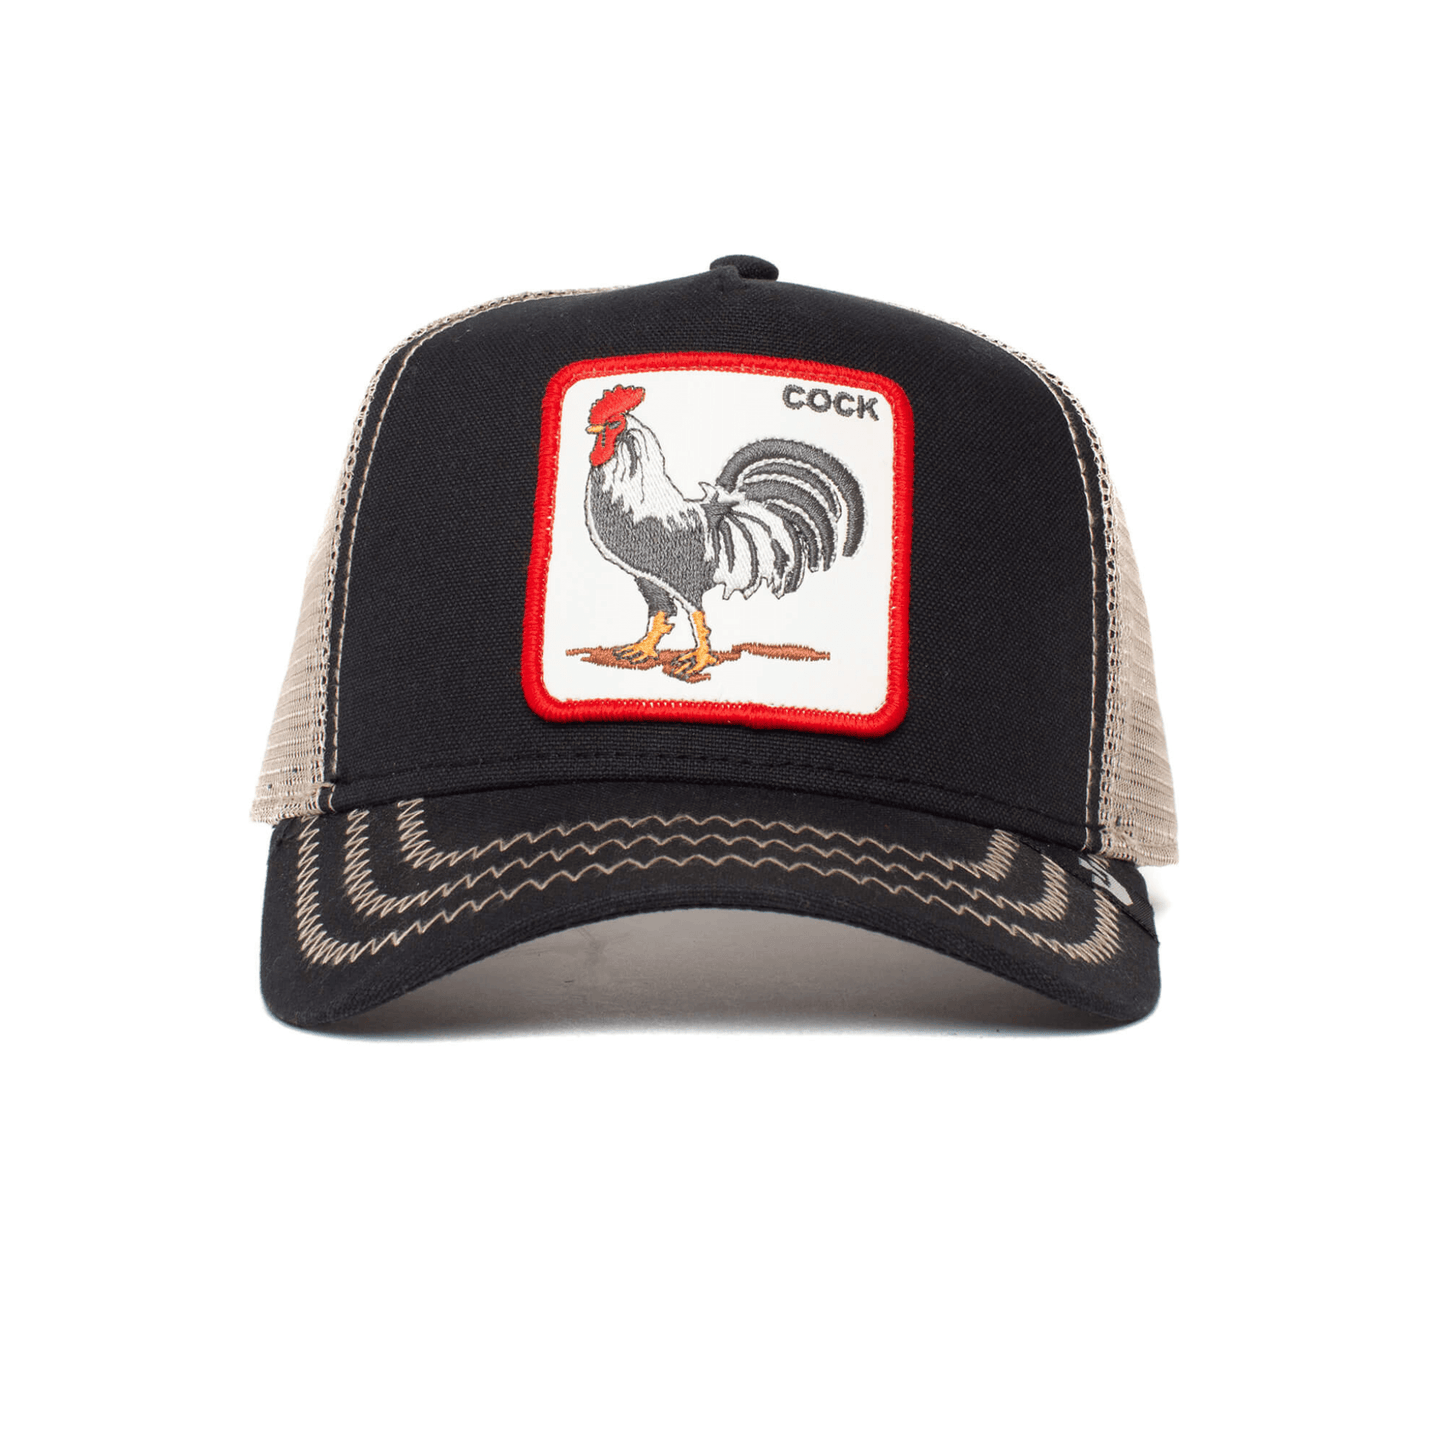 Goorin Bros Trucker Caps - The Cock Farm Cap in Black